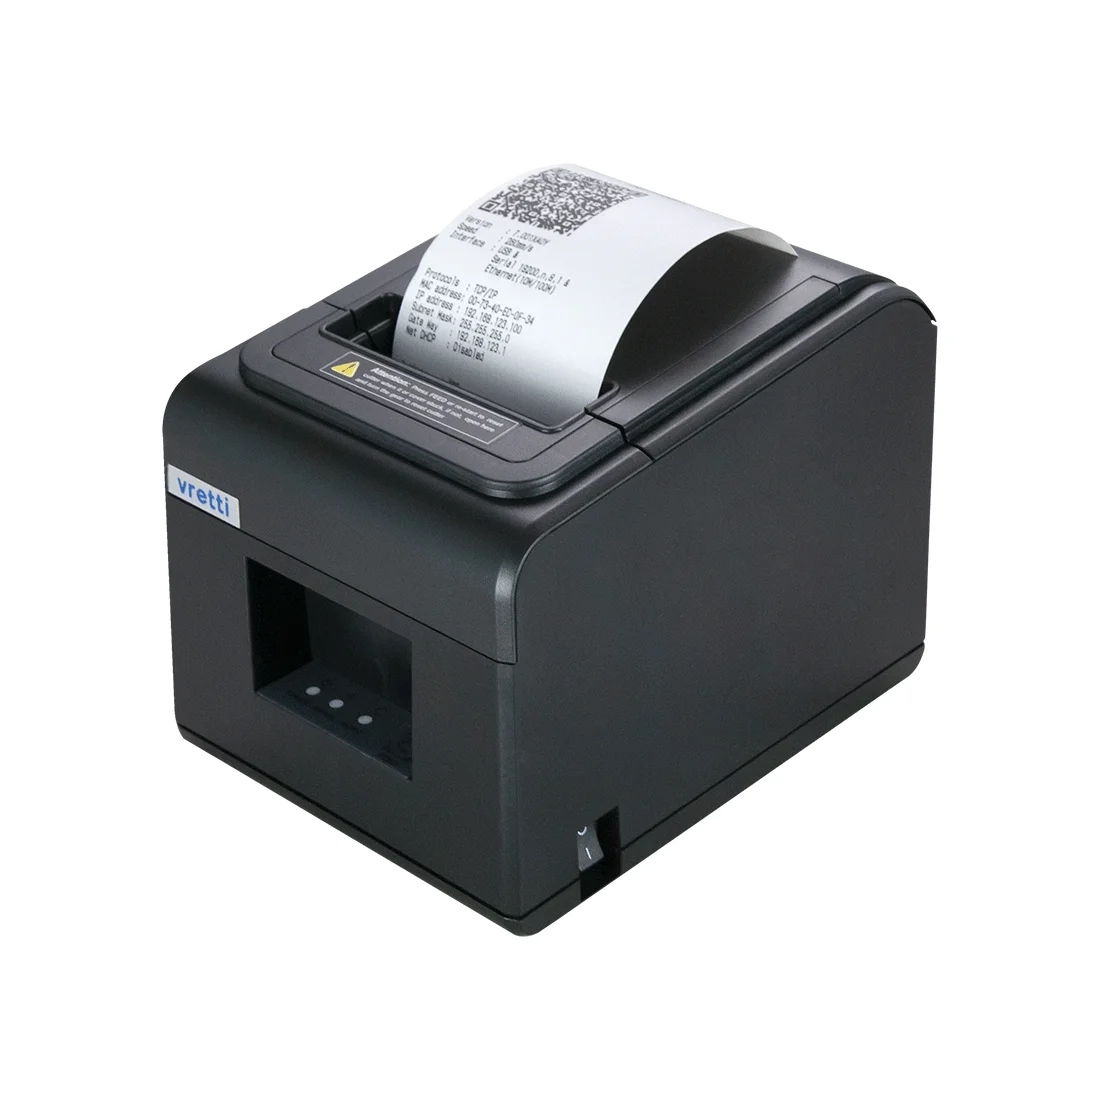 

cheap 80mm pos billing thermal receipt printer support usb serial lan interface